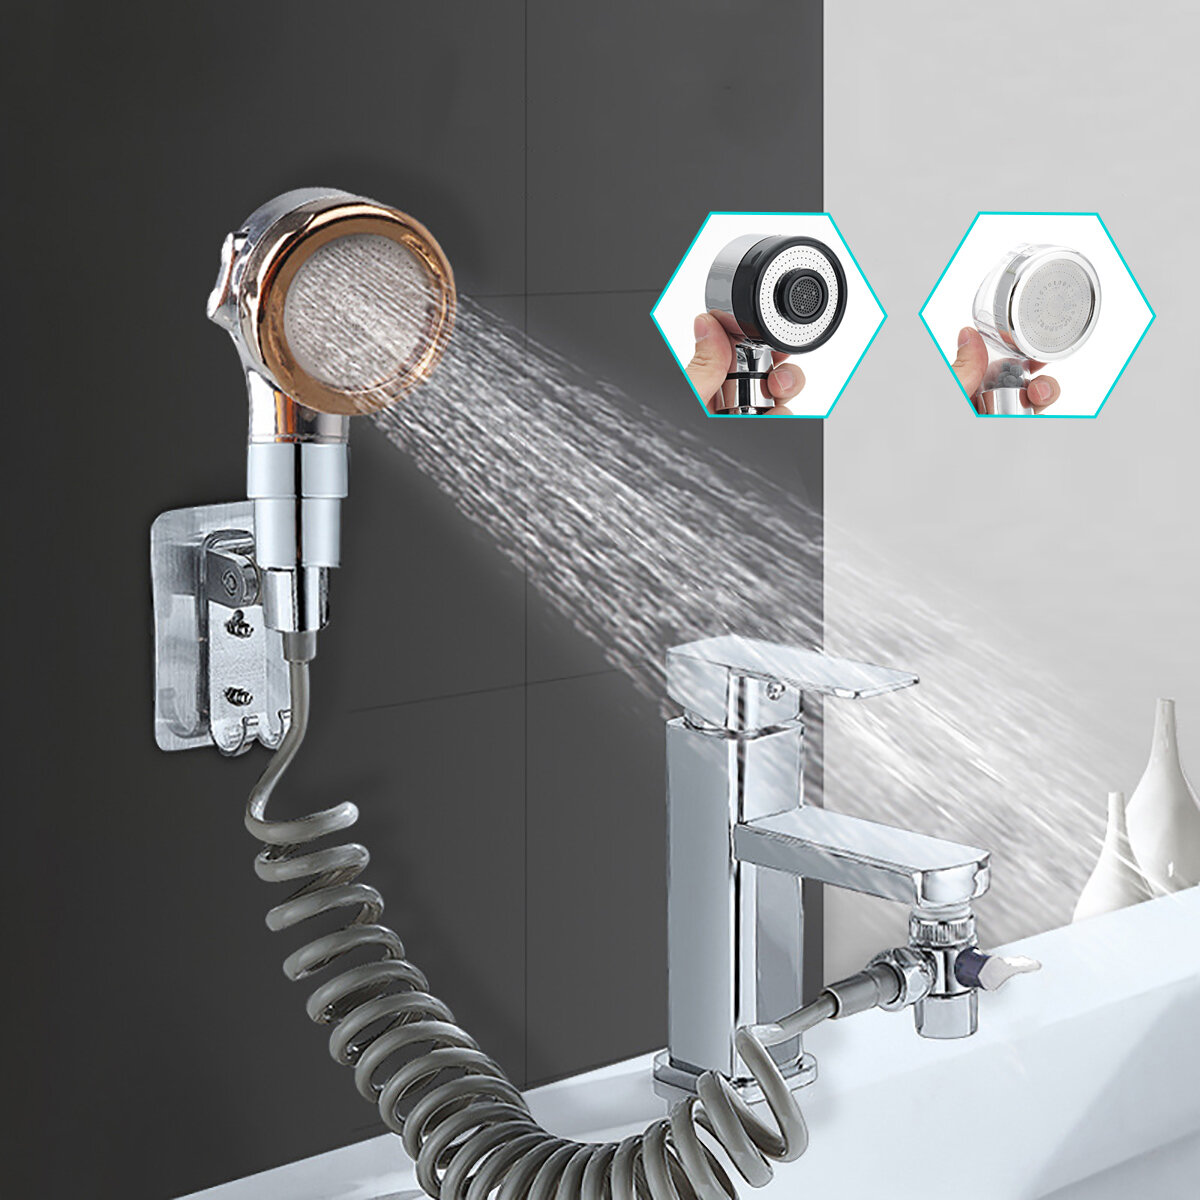 Bathroom Wash Face Basin Water Tap External Shower Head HandHeld Bidet Sprayer Wash Jet Diverter Kit